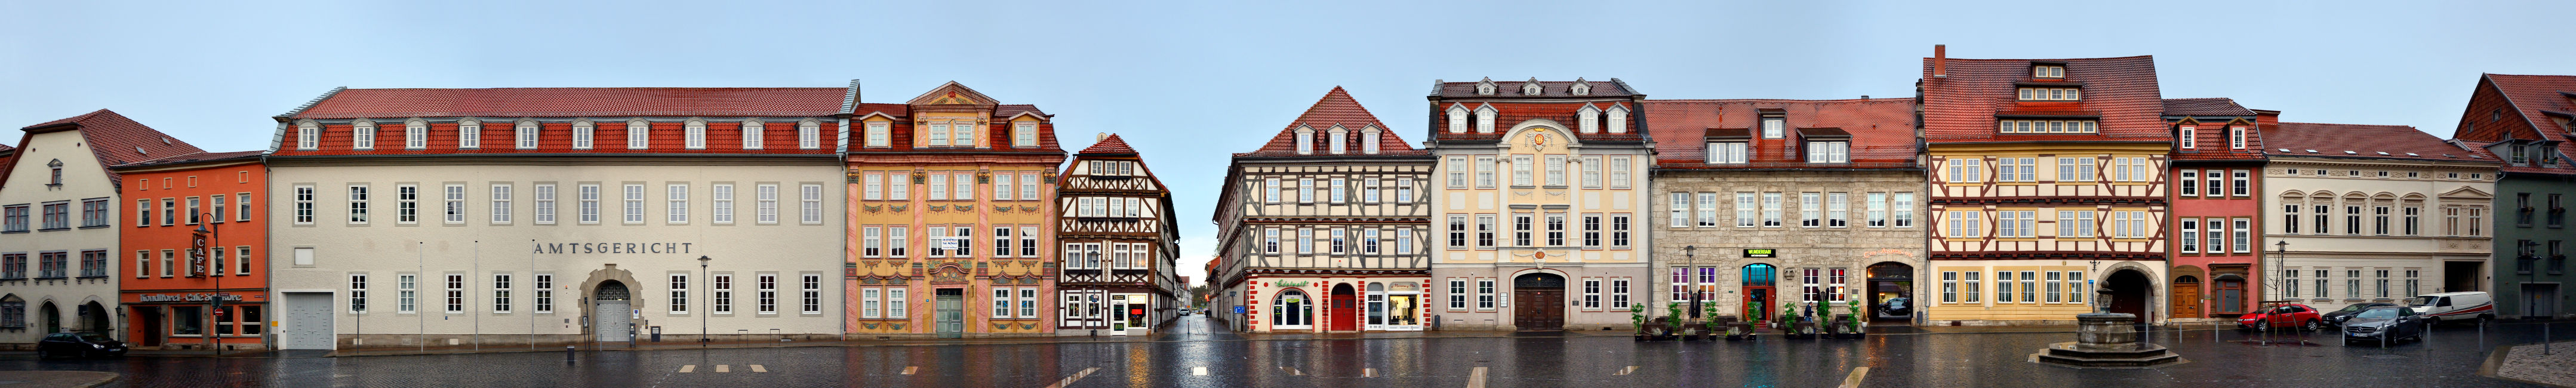 Mühlhausen Untermarkt Streetline Panorama Fassaden Altstadt Thuringia Old Town